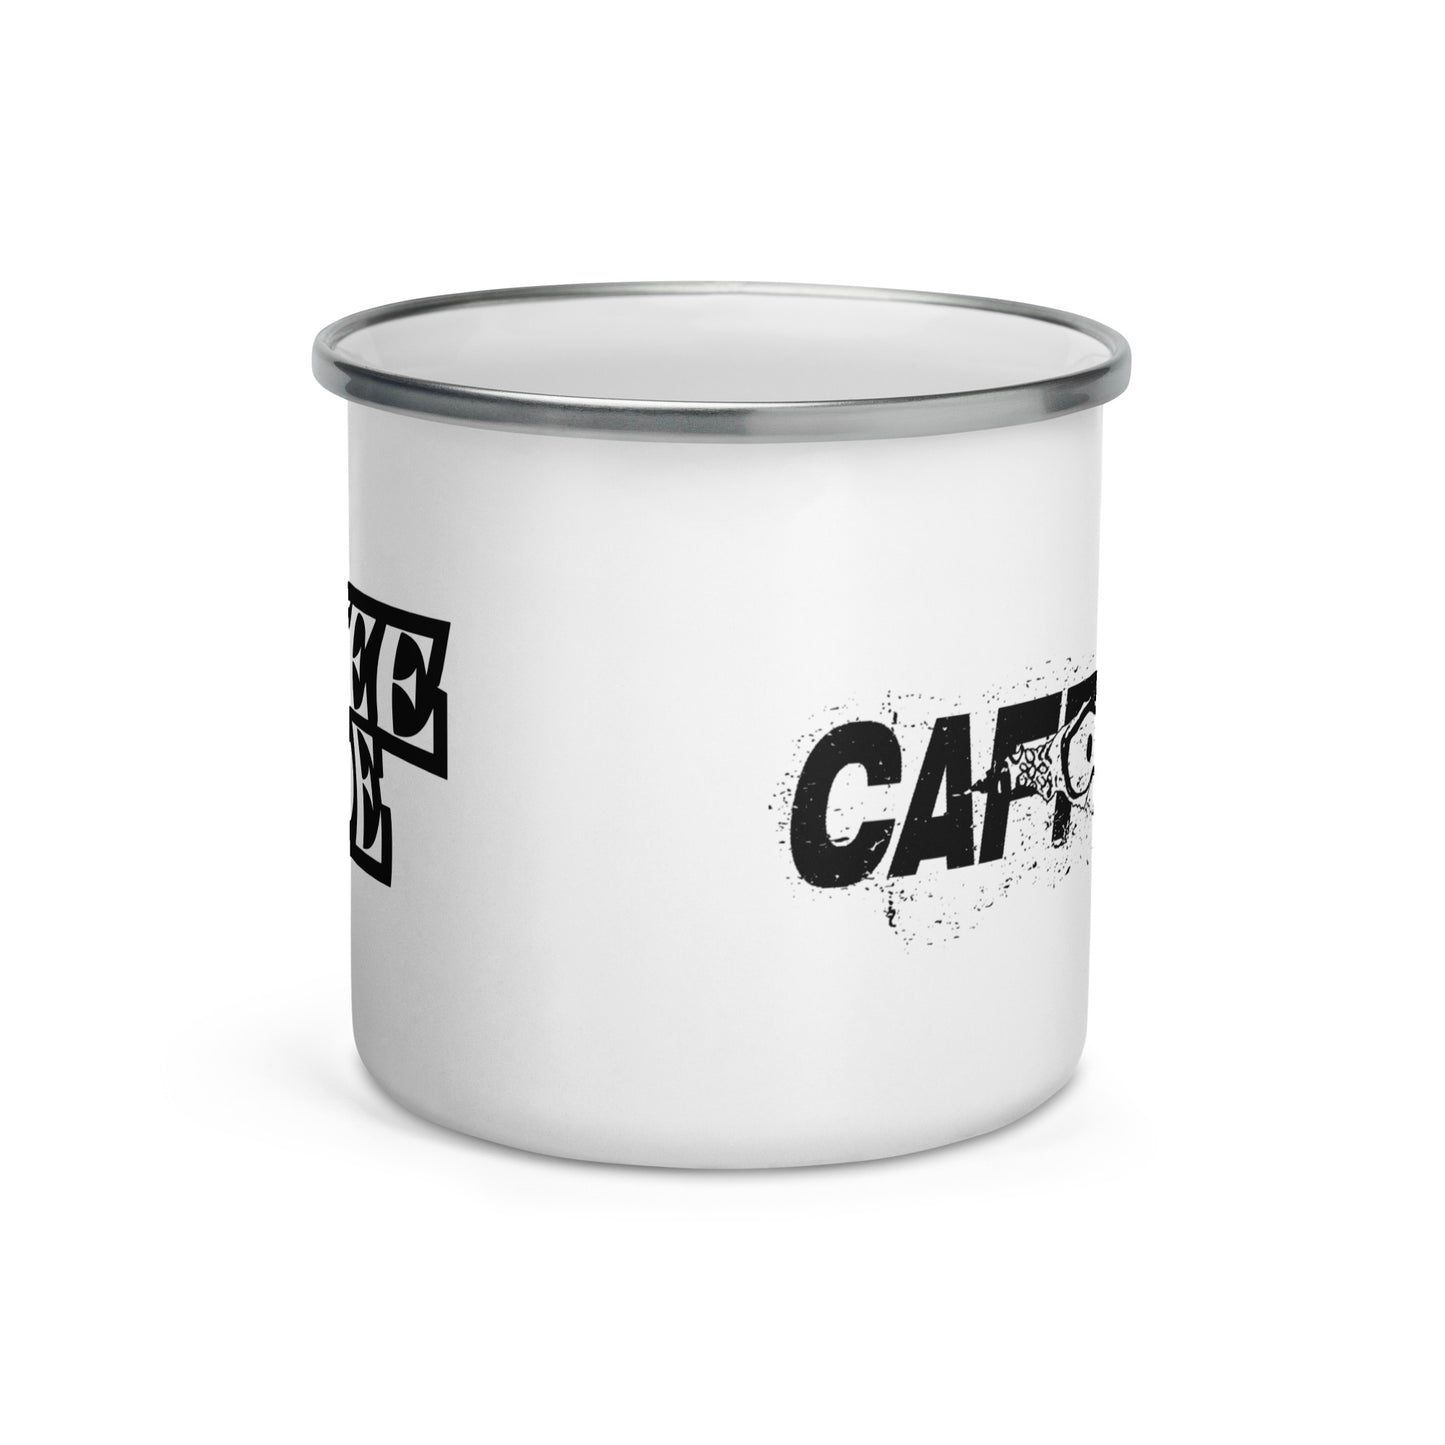 CAFFEINE DEALER Enamel Mug